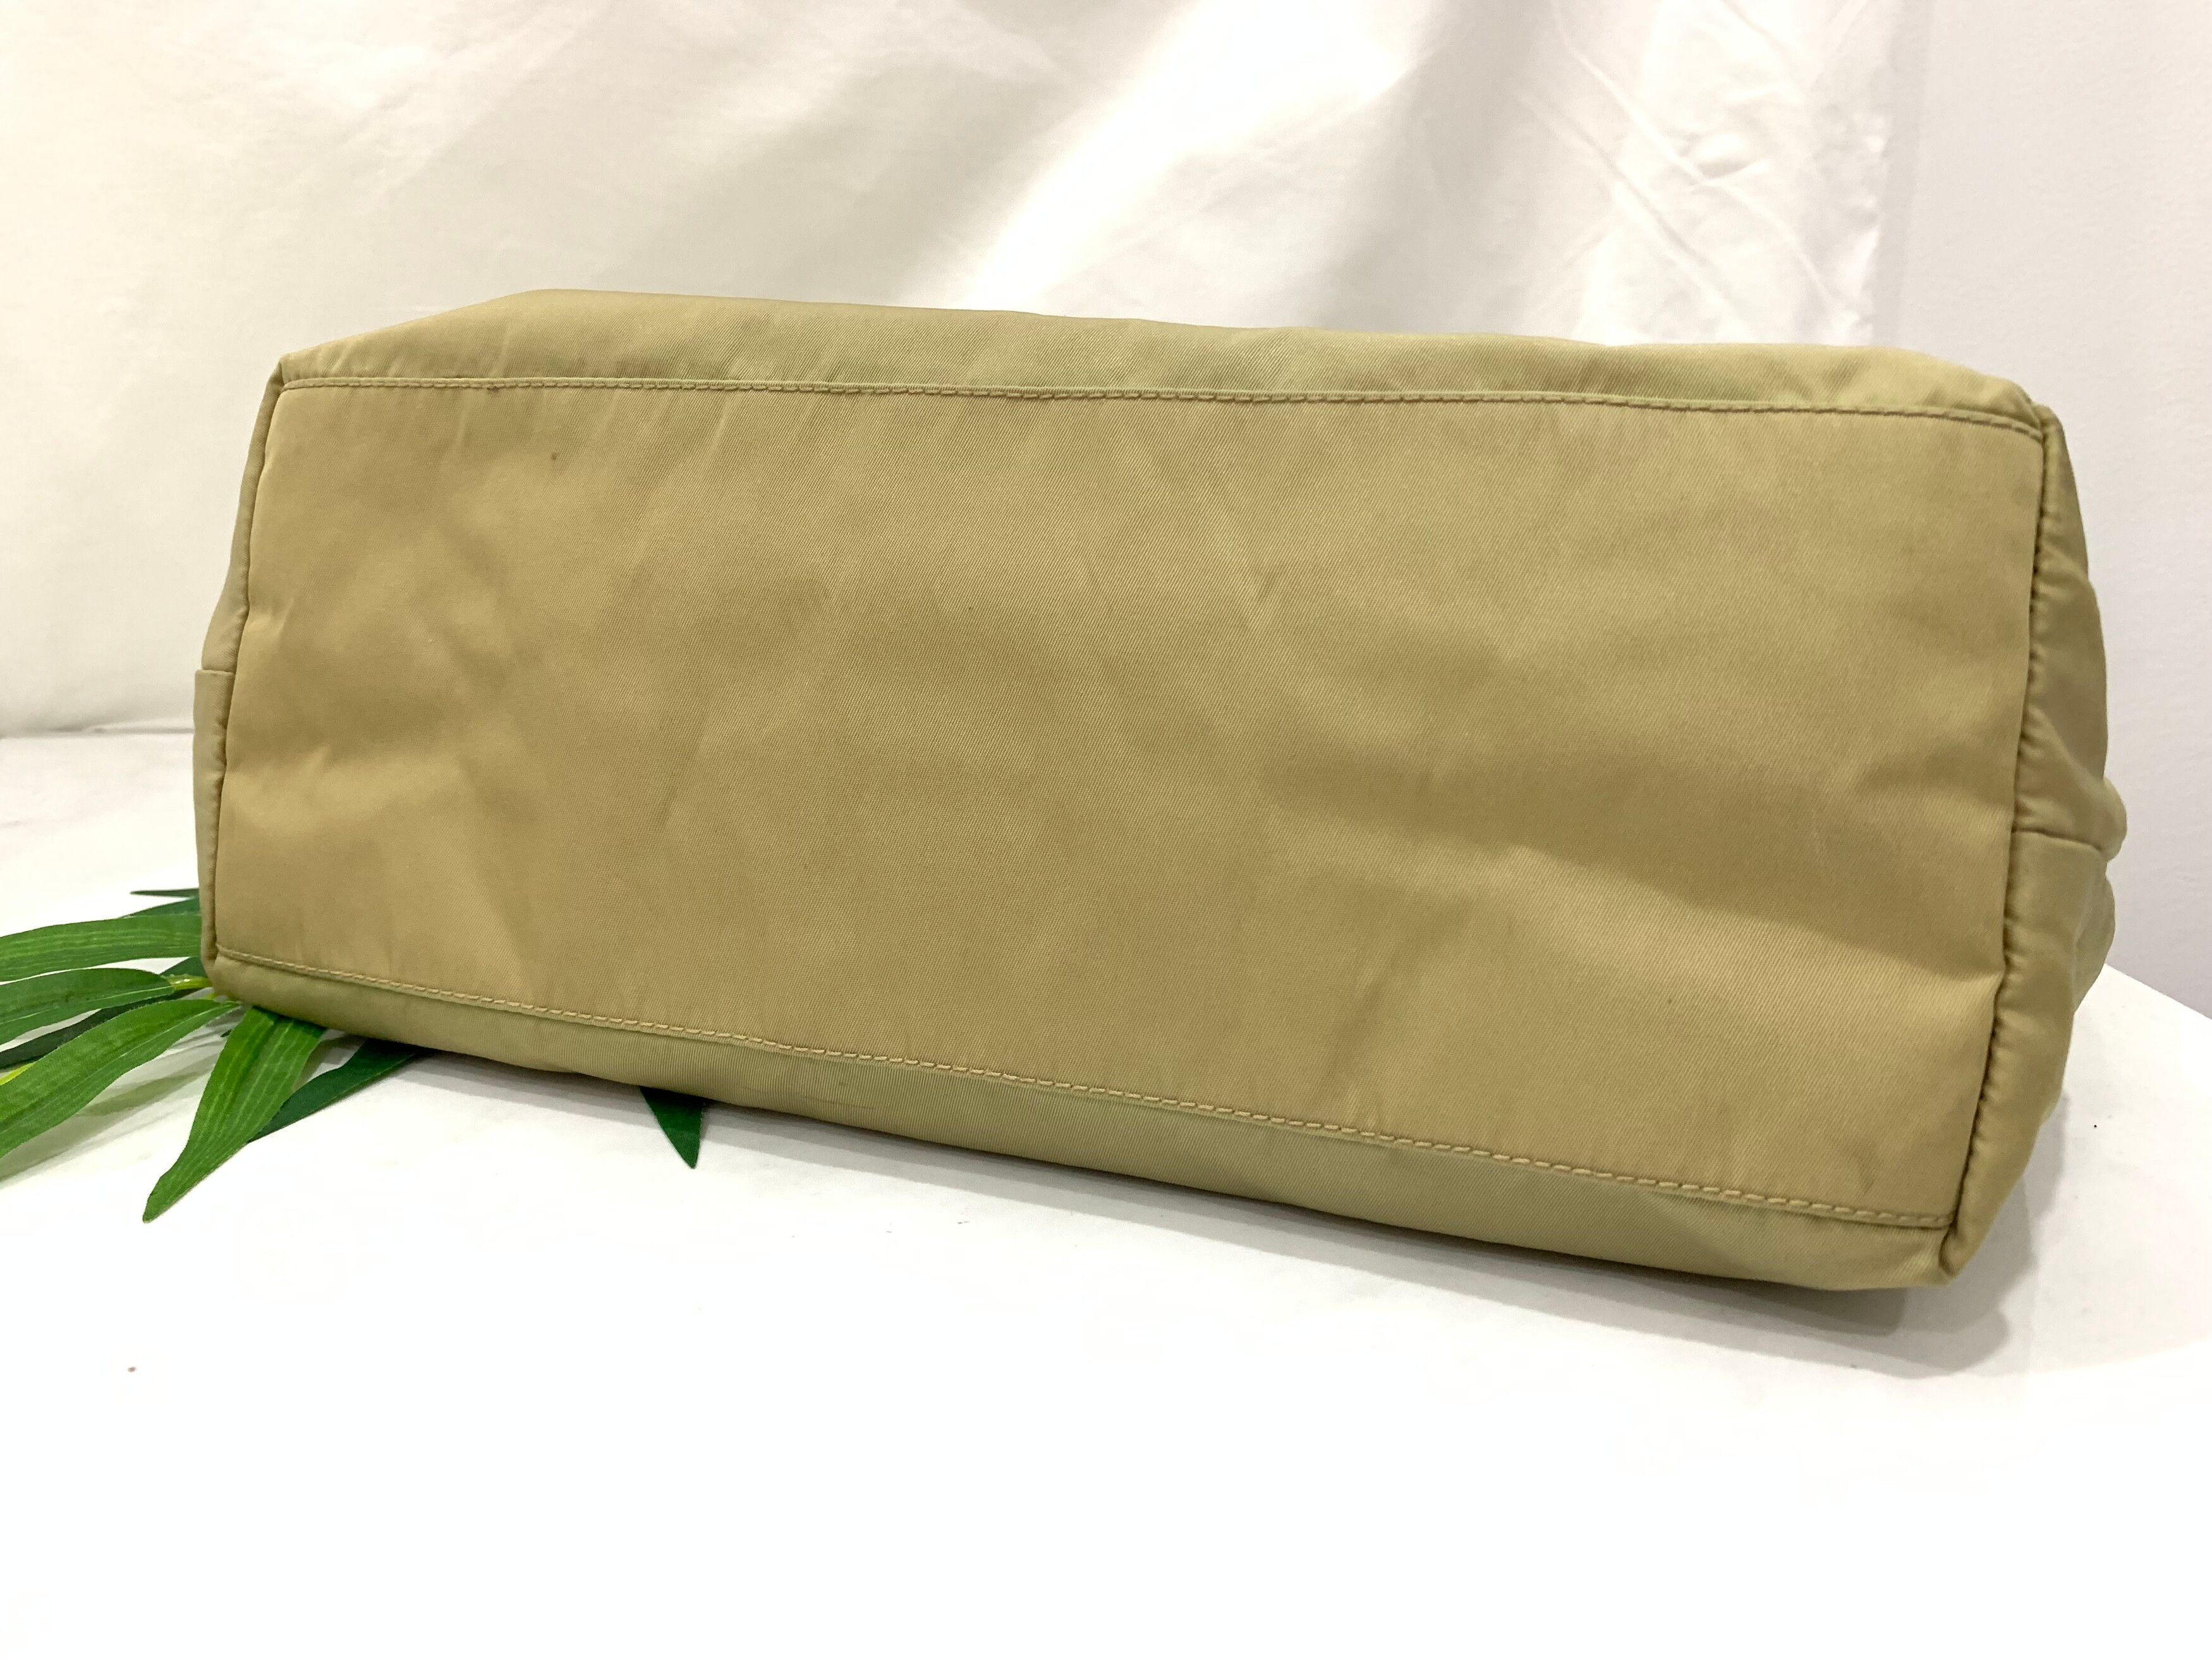 Authentic prada nylon shoulder bag - 7